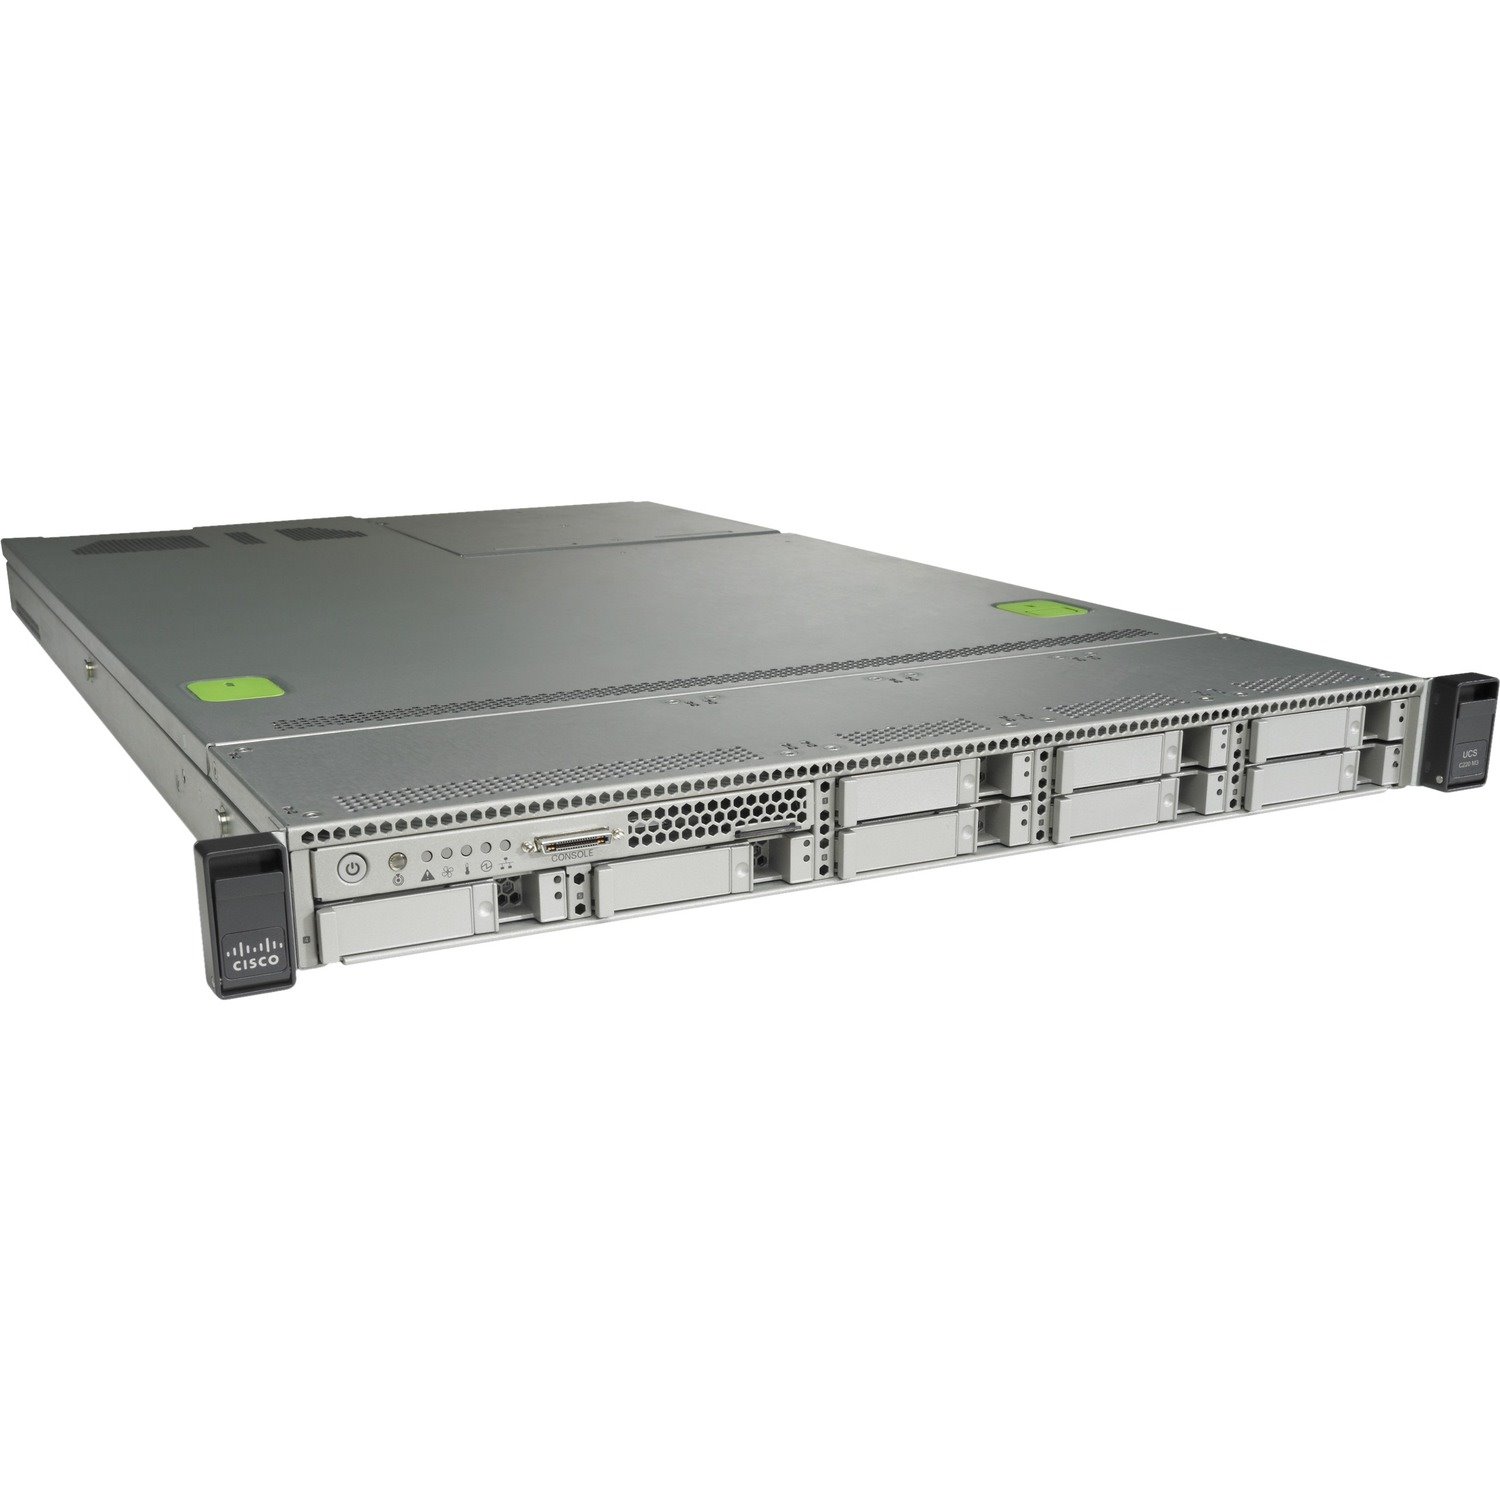 Cisco C220 M3 1U Rack Server - 2 x Intel Xeon E5-2650 v2 2.60 GHz - 16 GB RAM - 12Gb/s SAS, Serial ATA Controller - Refurbished